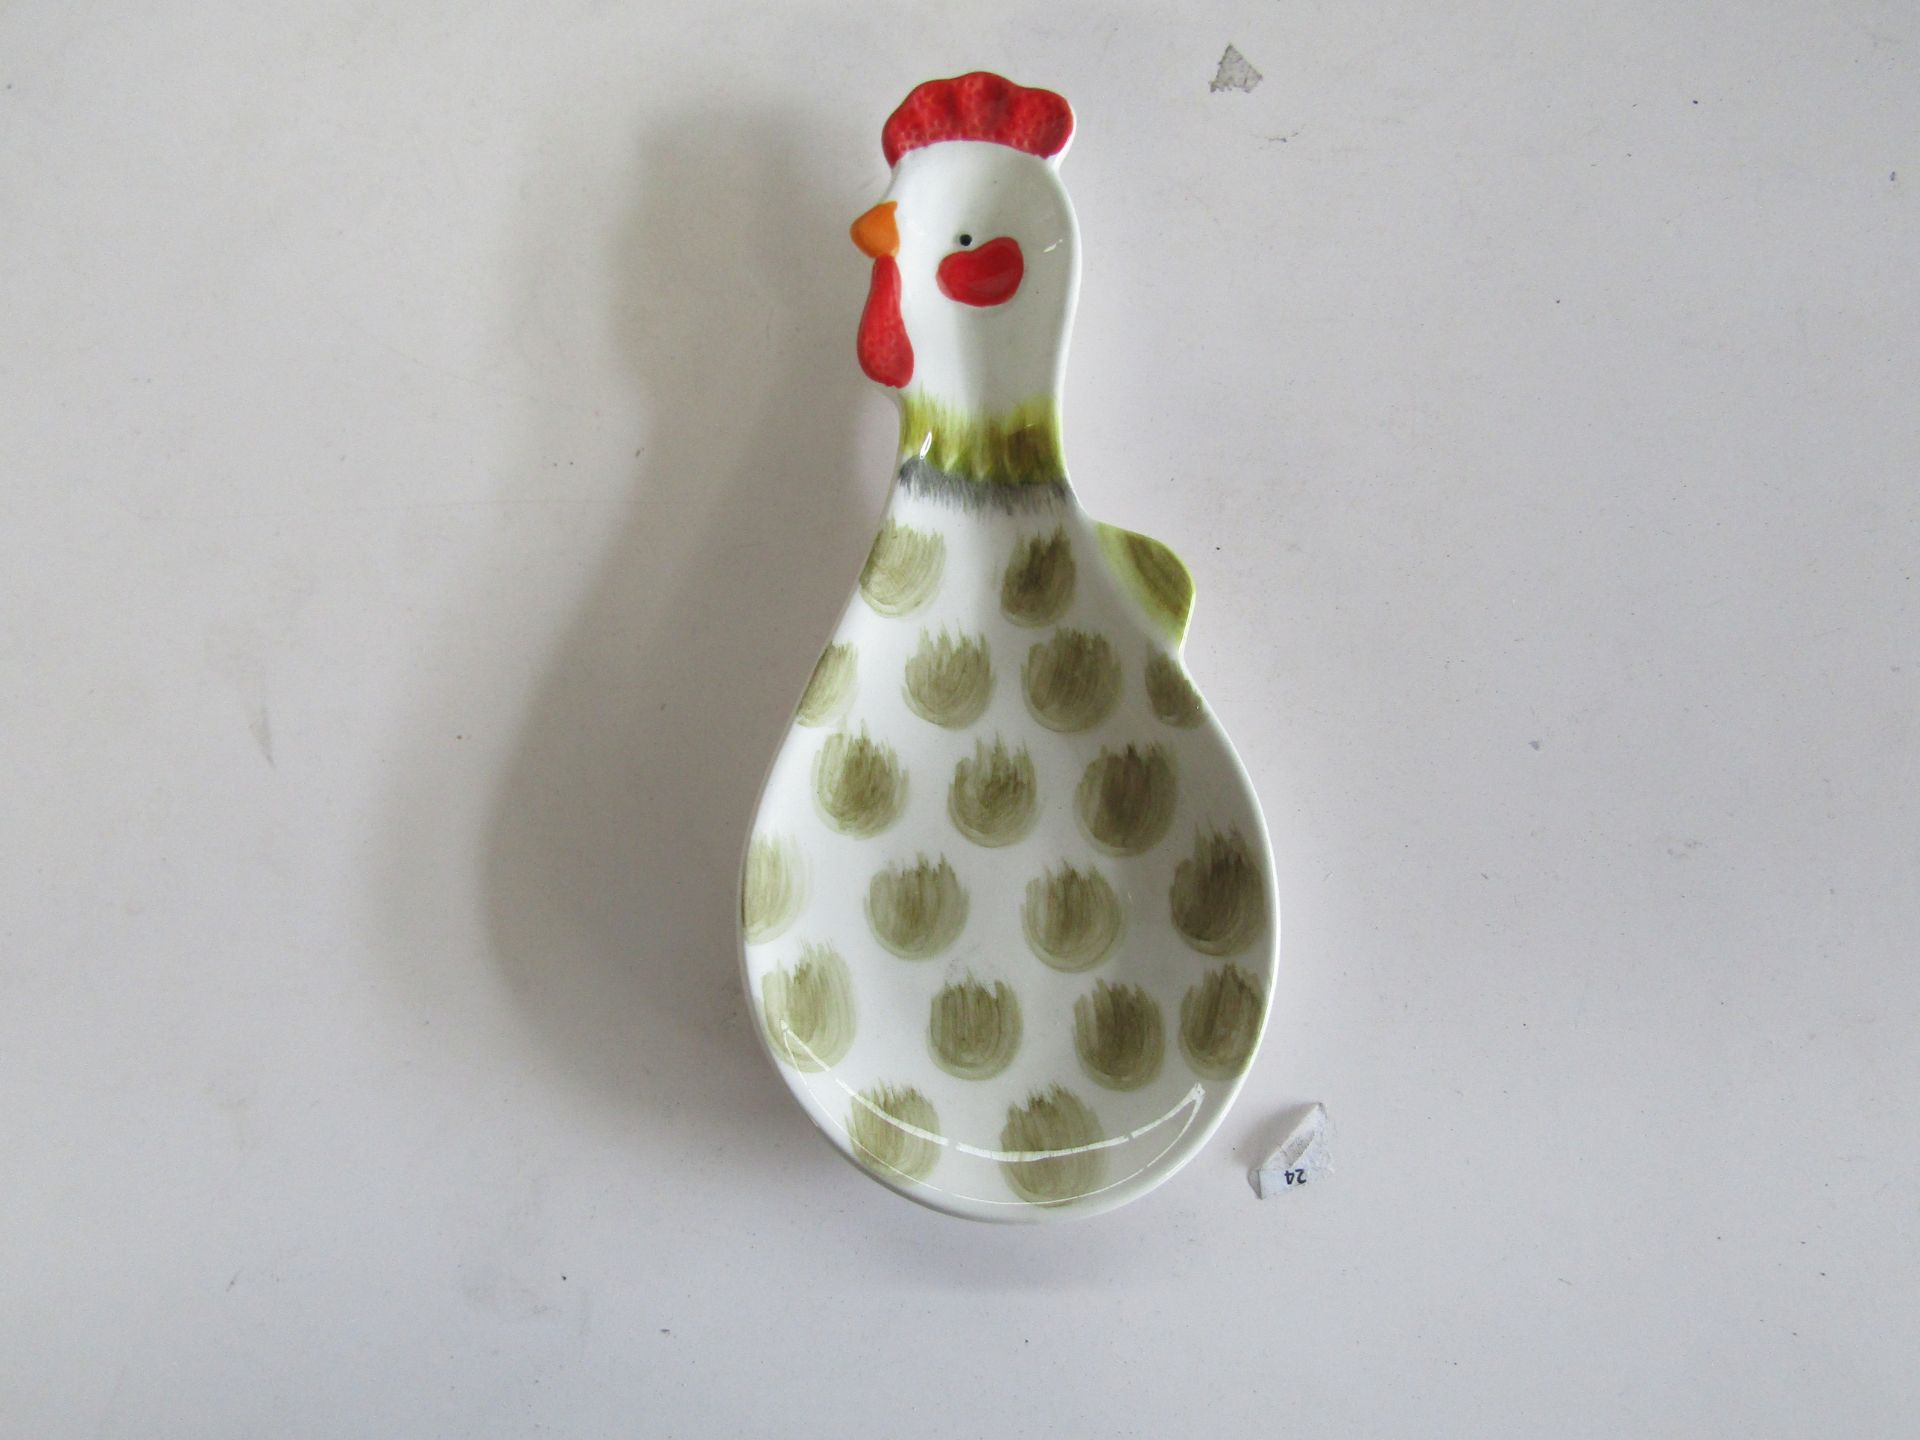 2x Chicken Ceramic Trinket Dish - New.